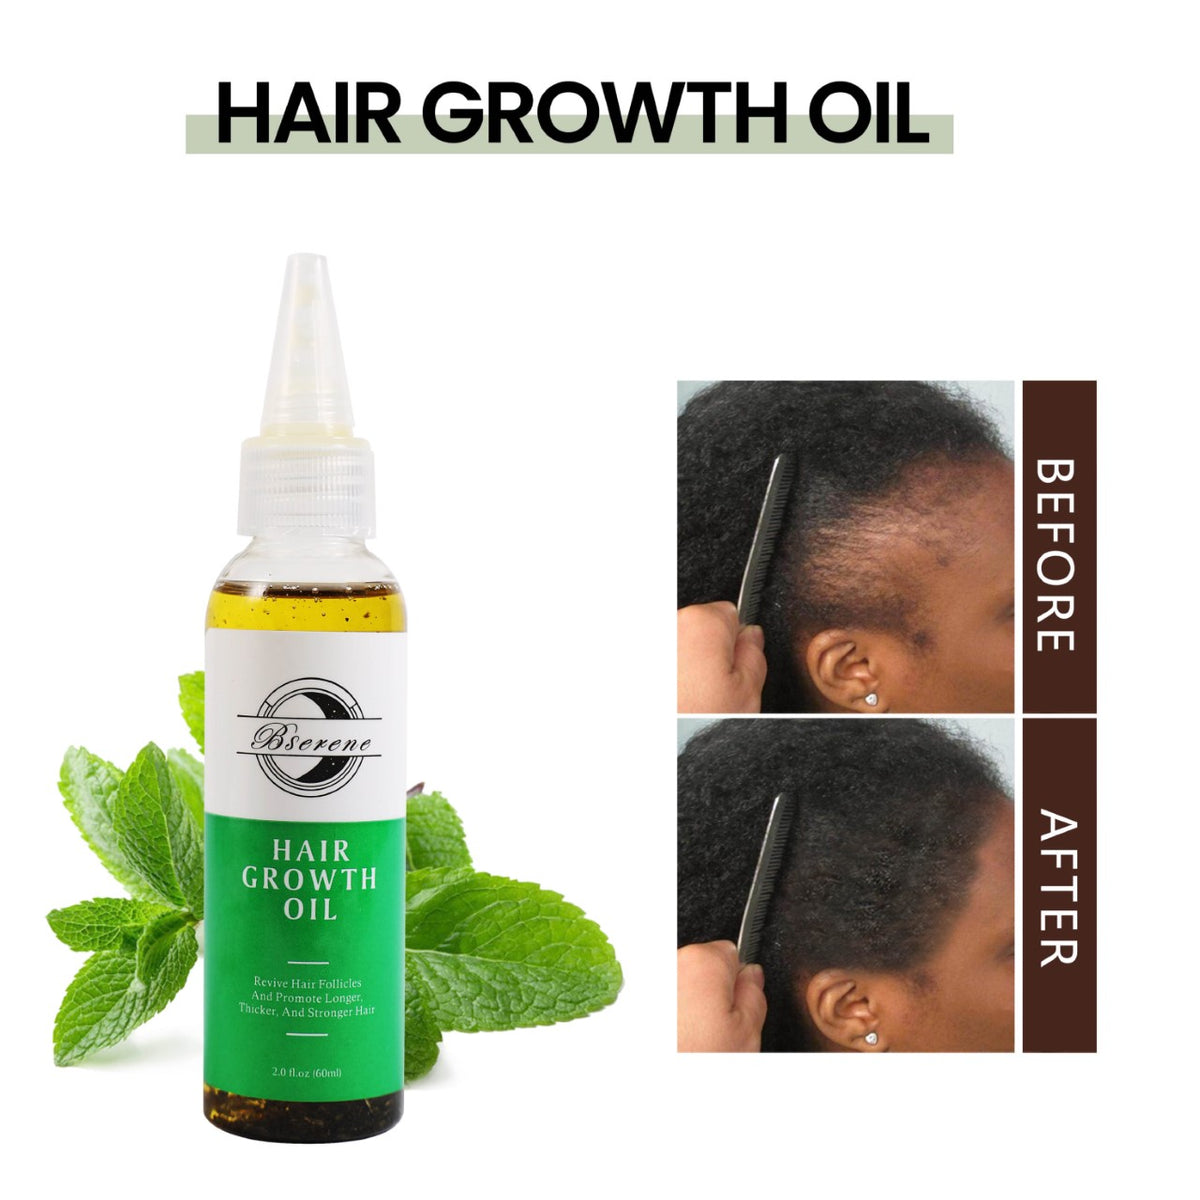 Bserene Hair Growth Oil Regrowth Kit